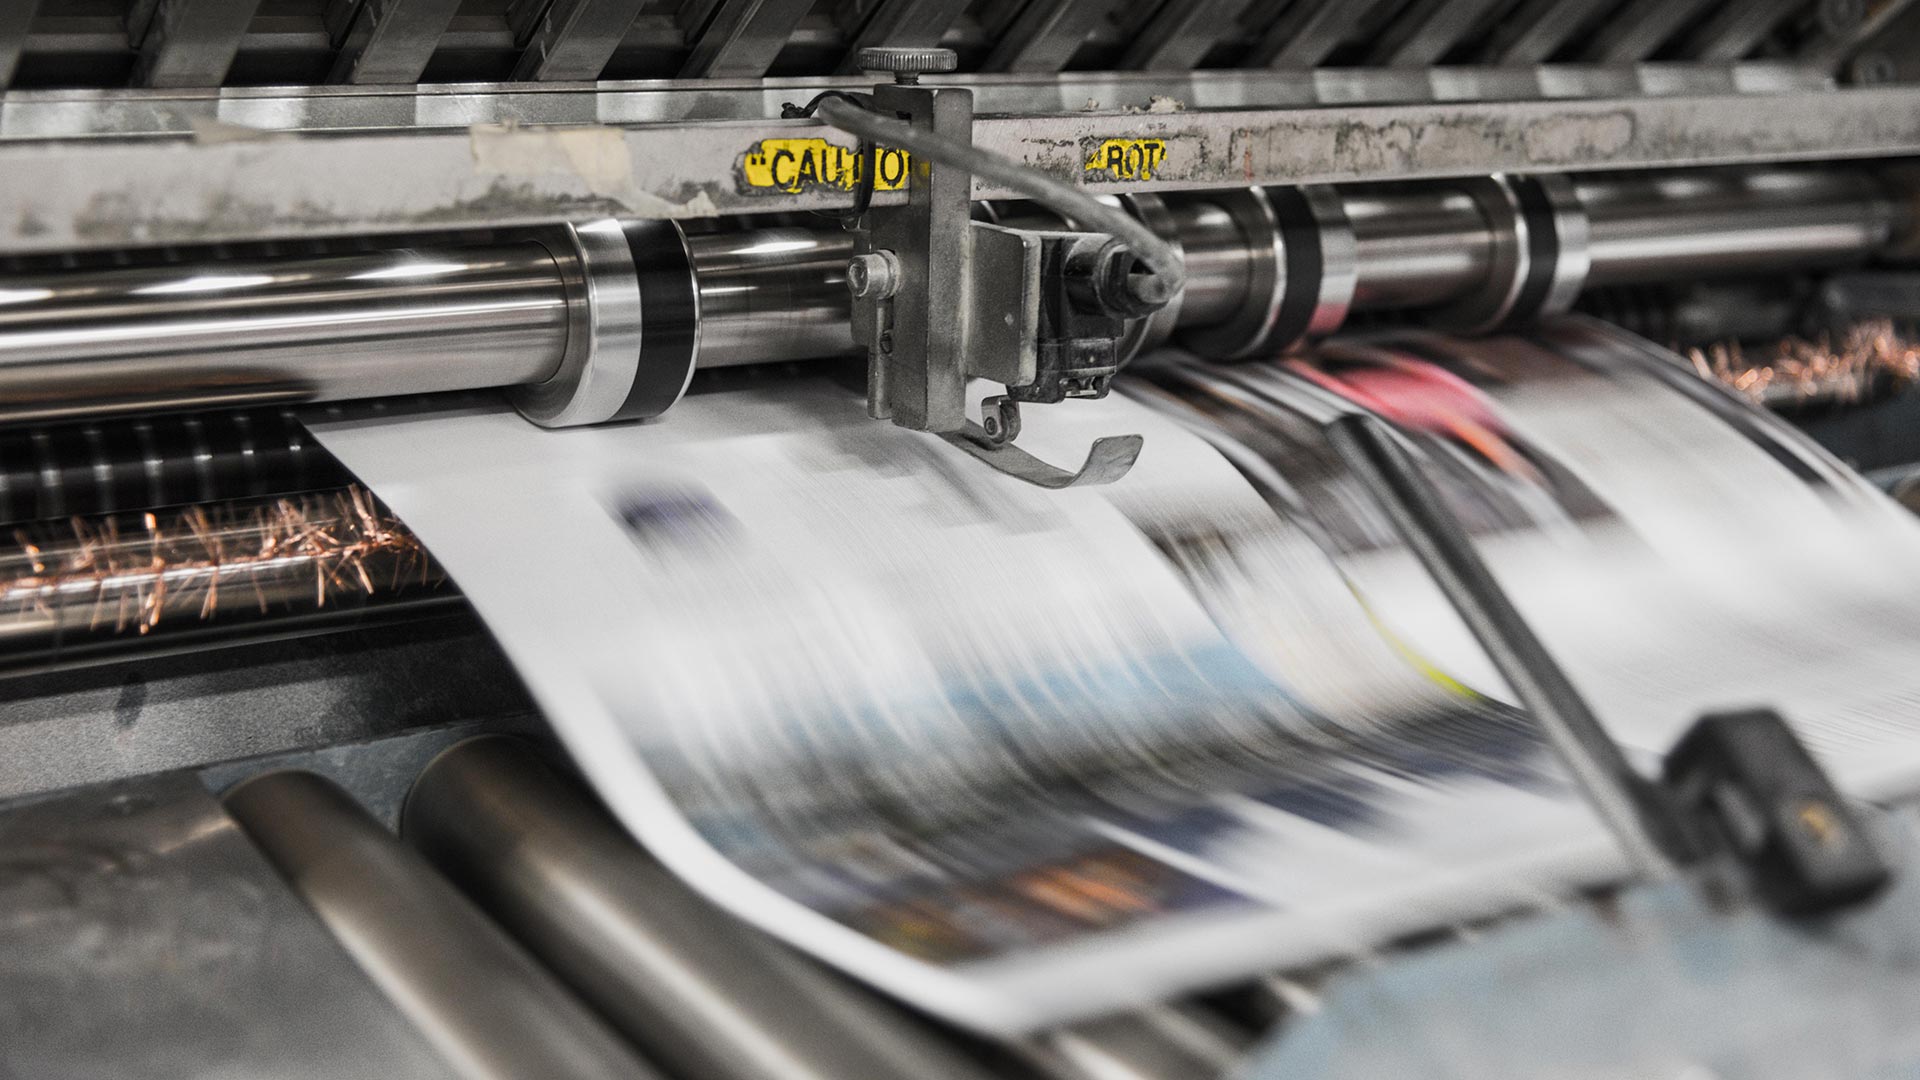 Publications rushing off printing press